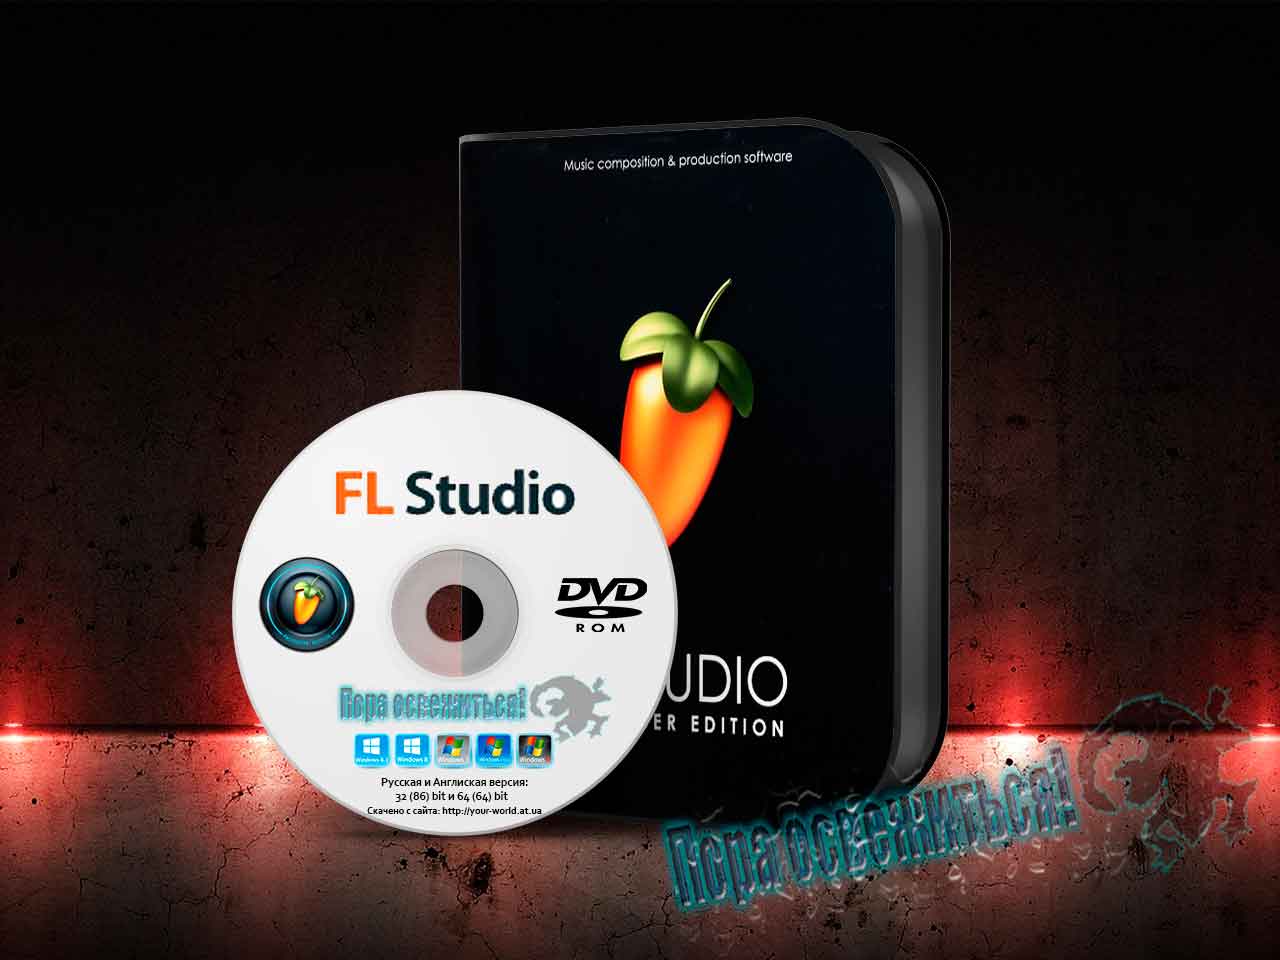 fl studio 12 producer edition free